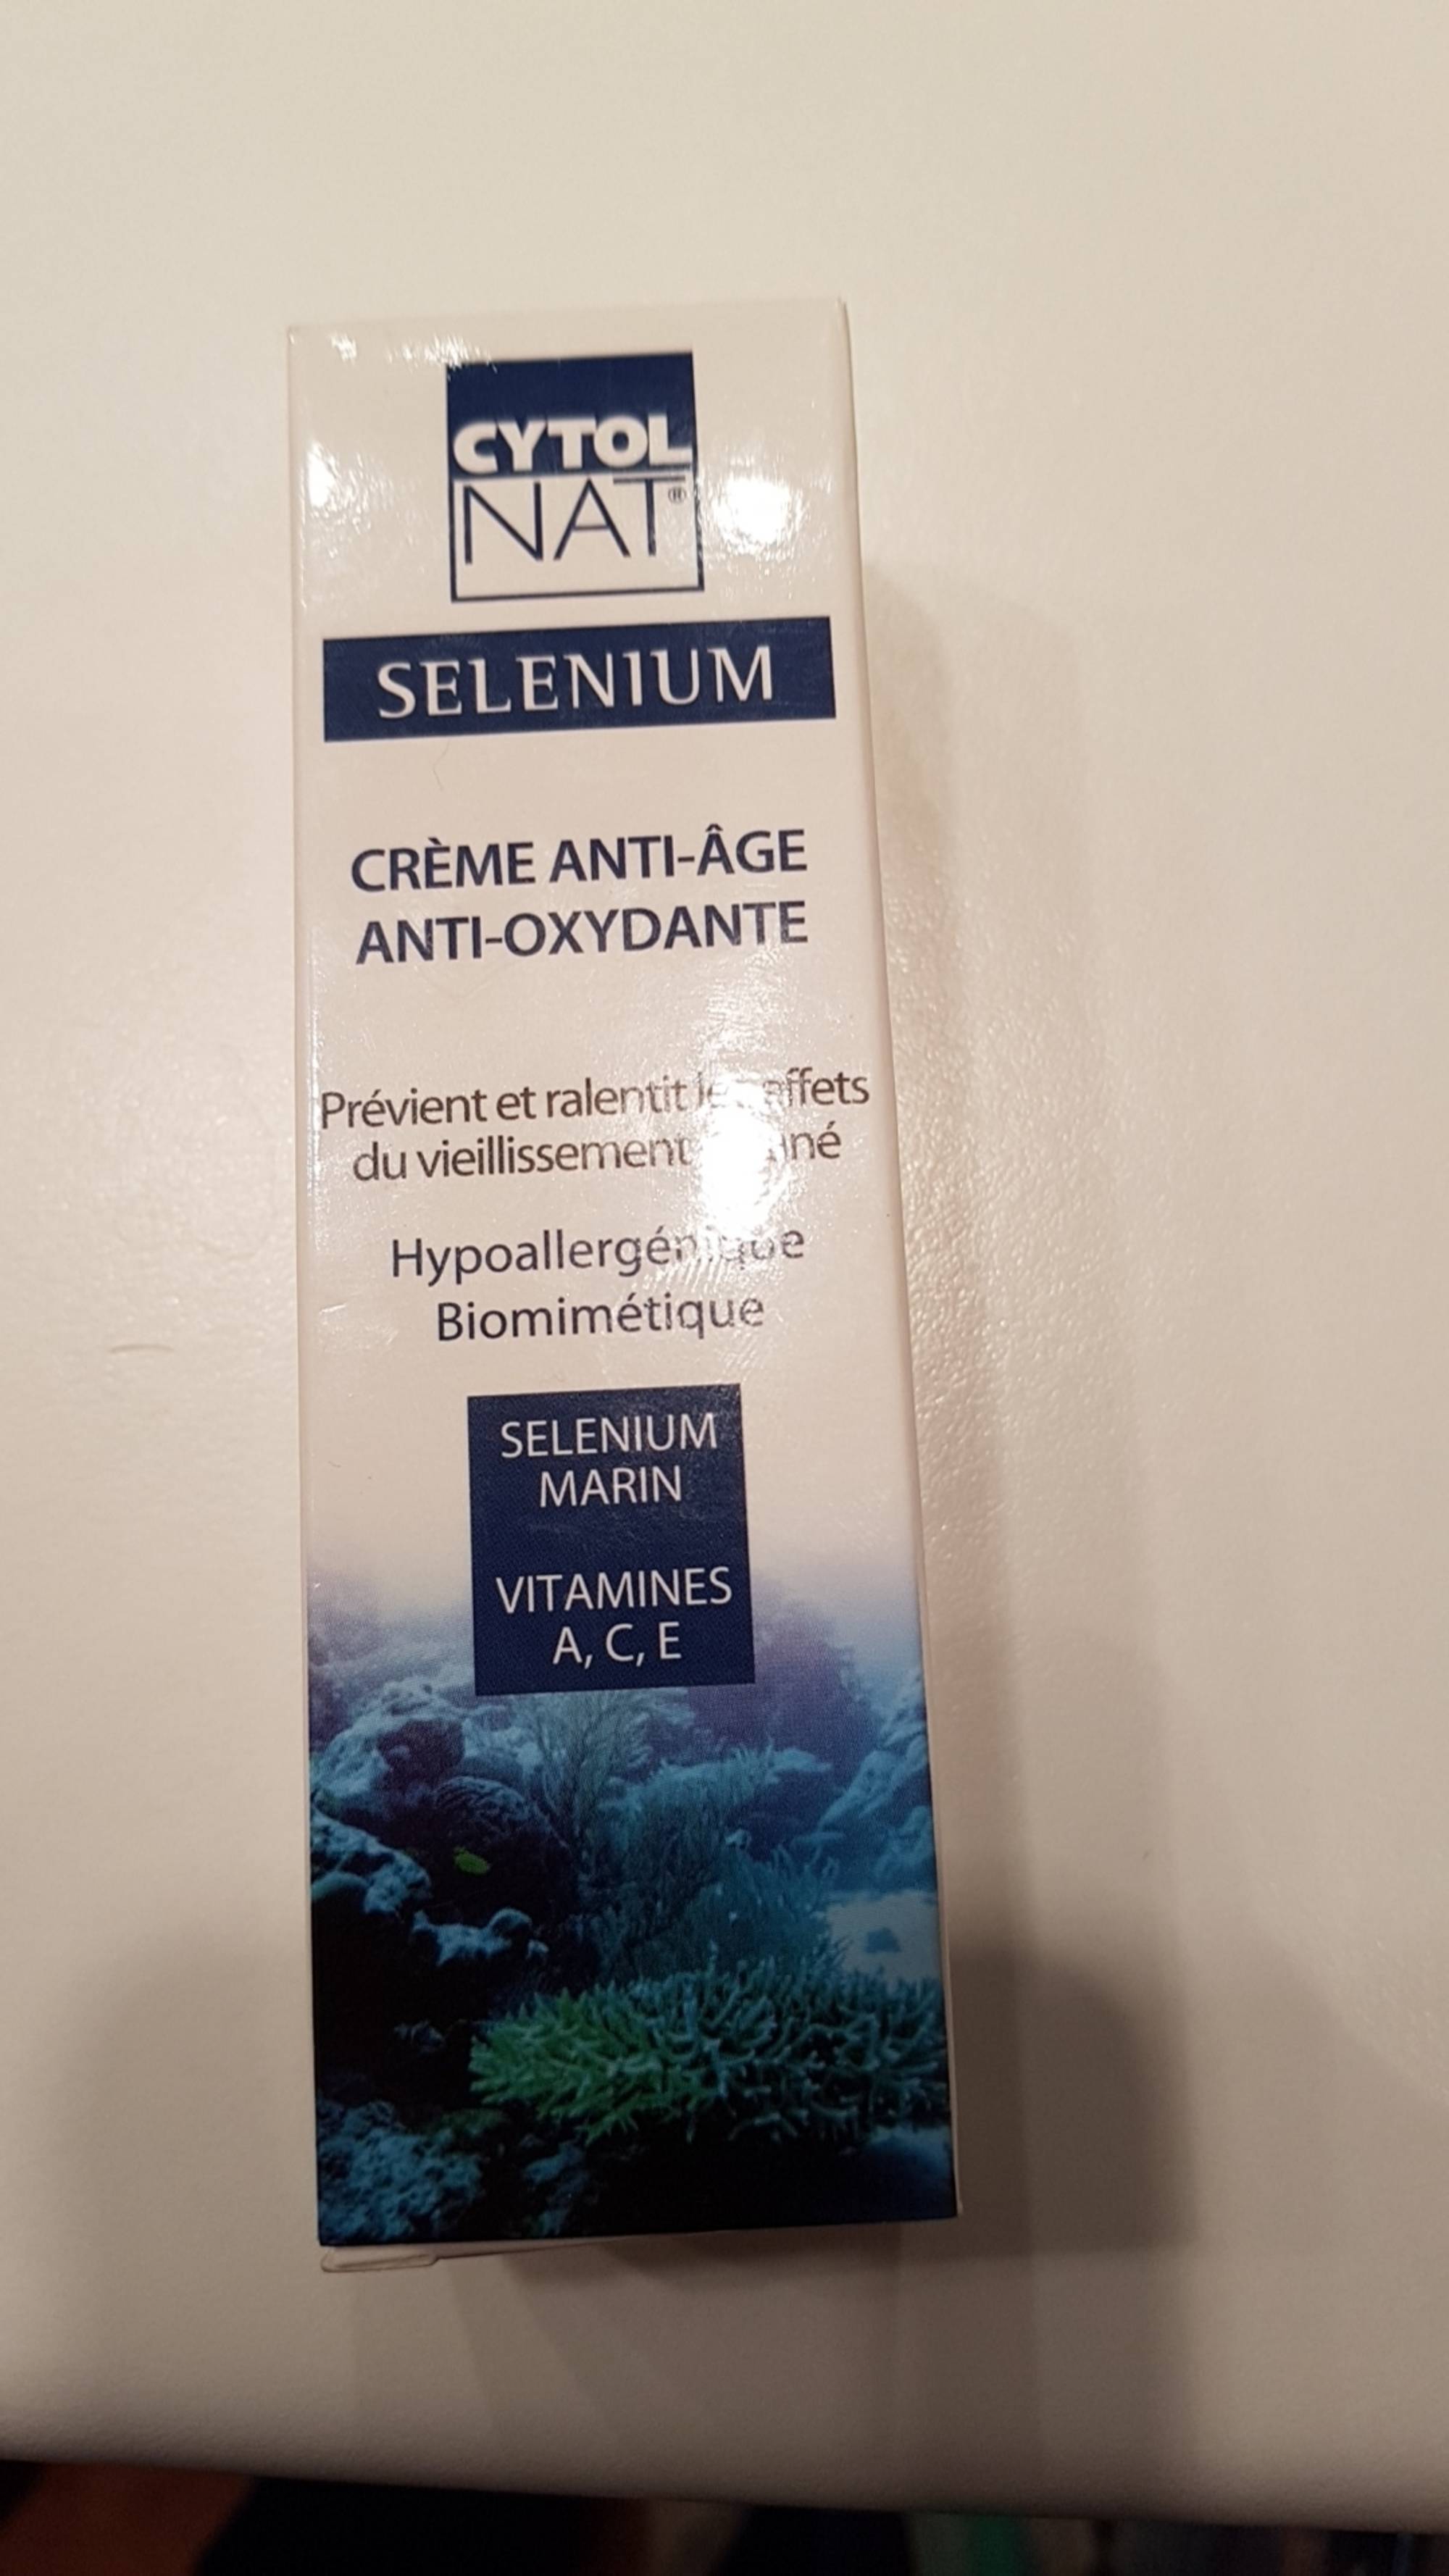 CYTOLNAT - Selenium - Crème anti-âge anti-oxydante